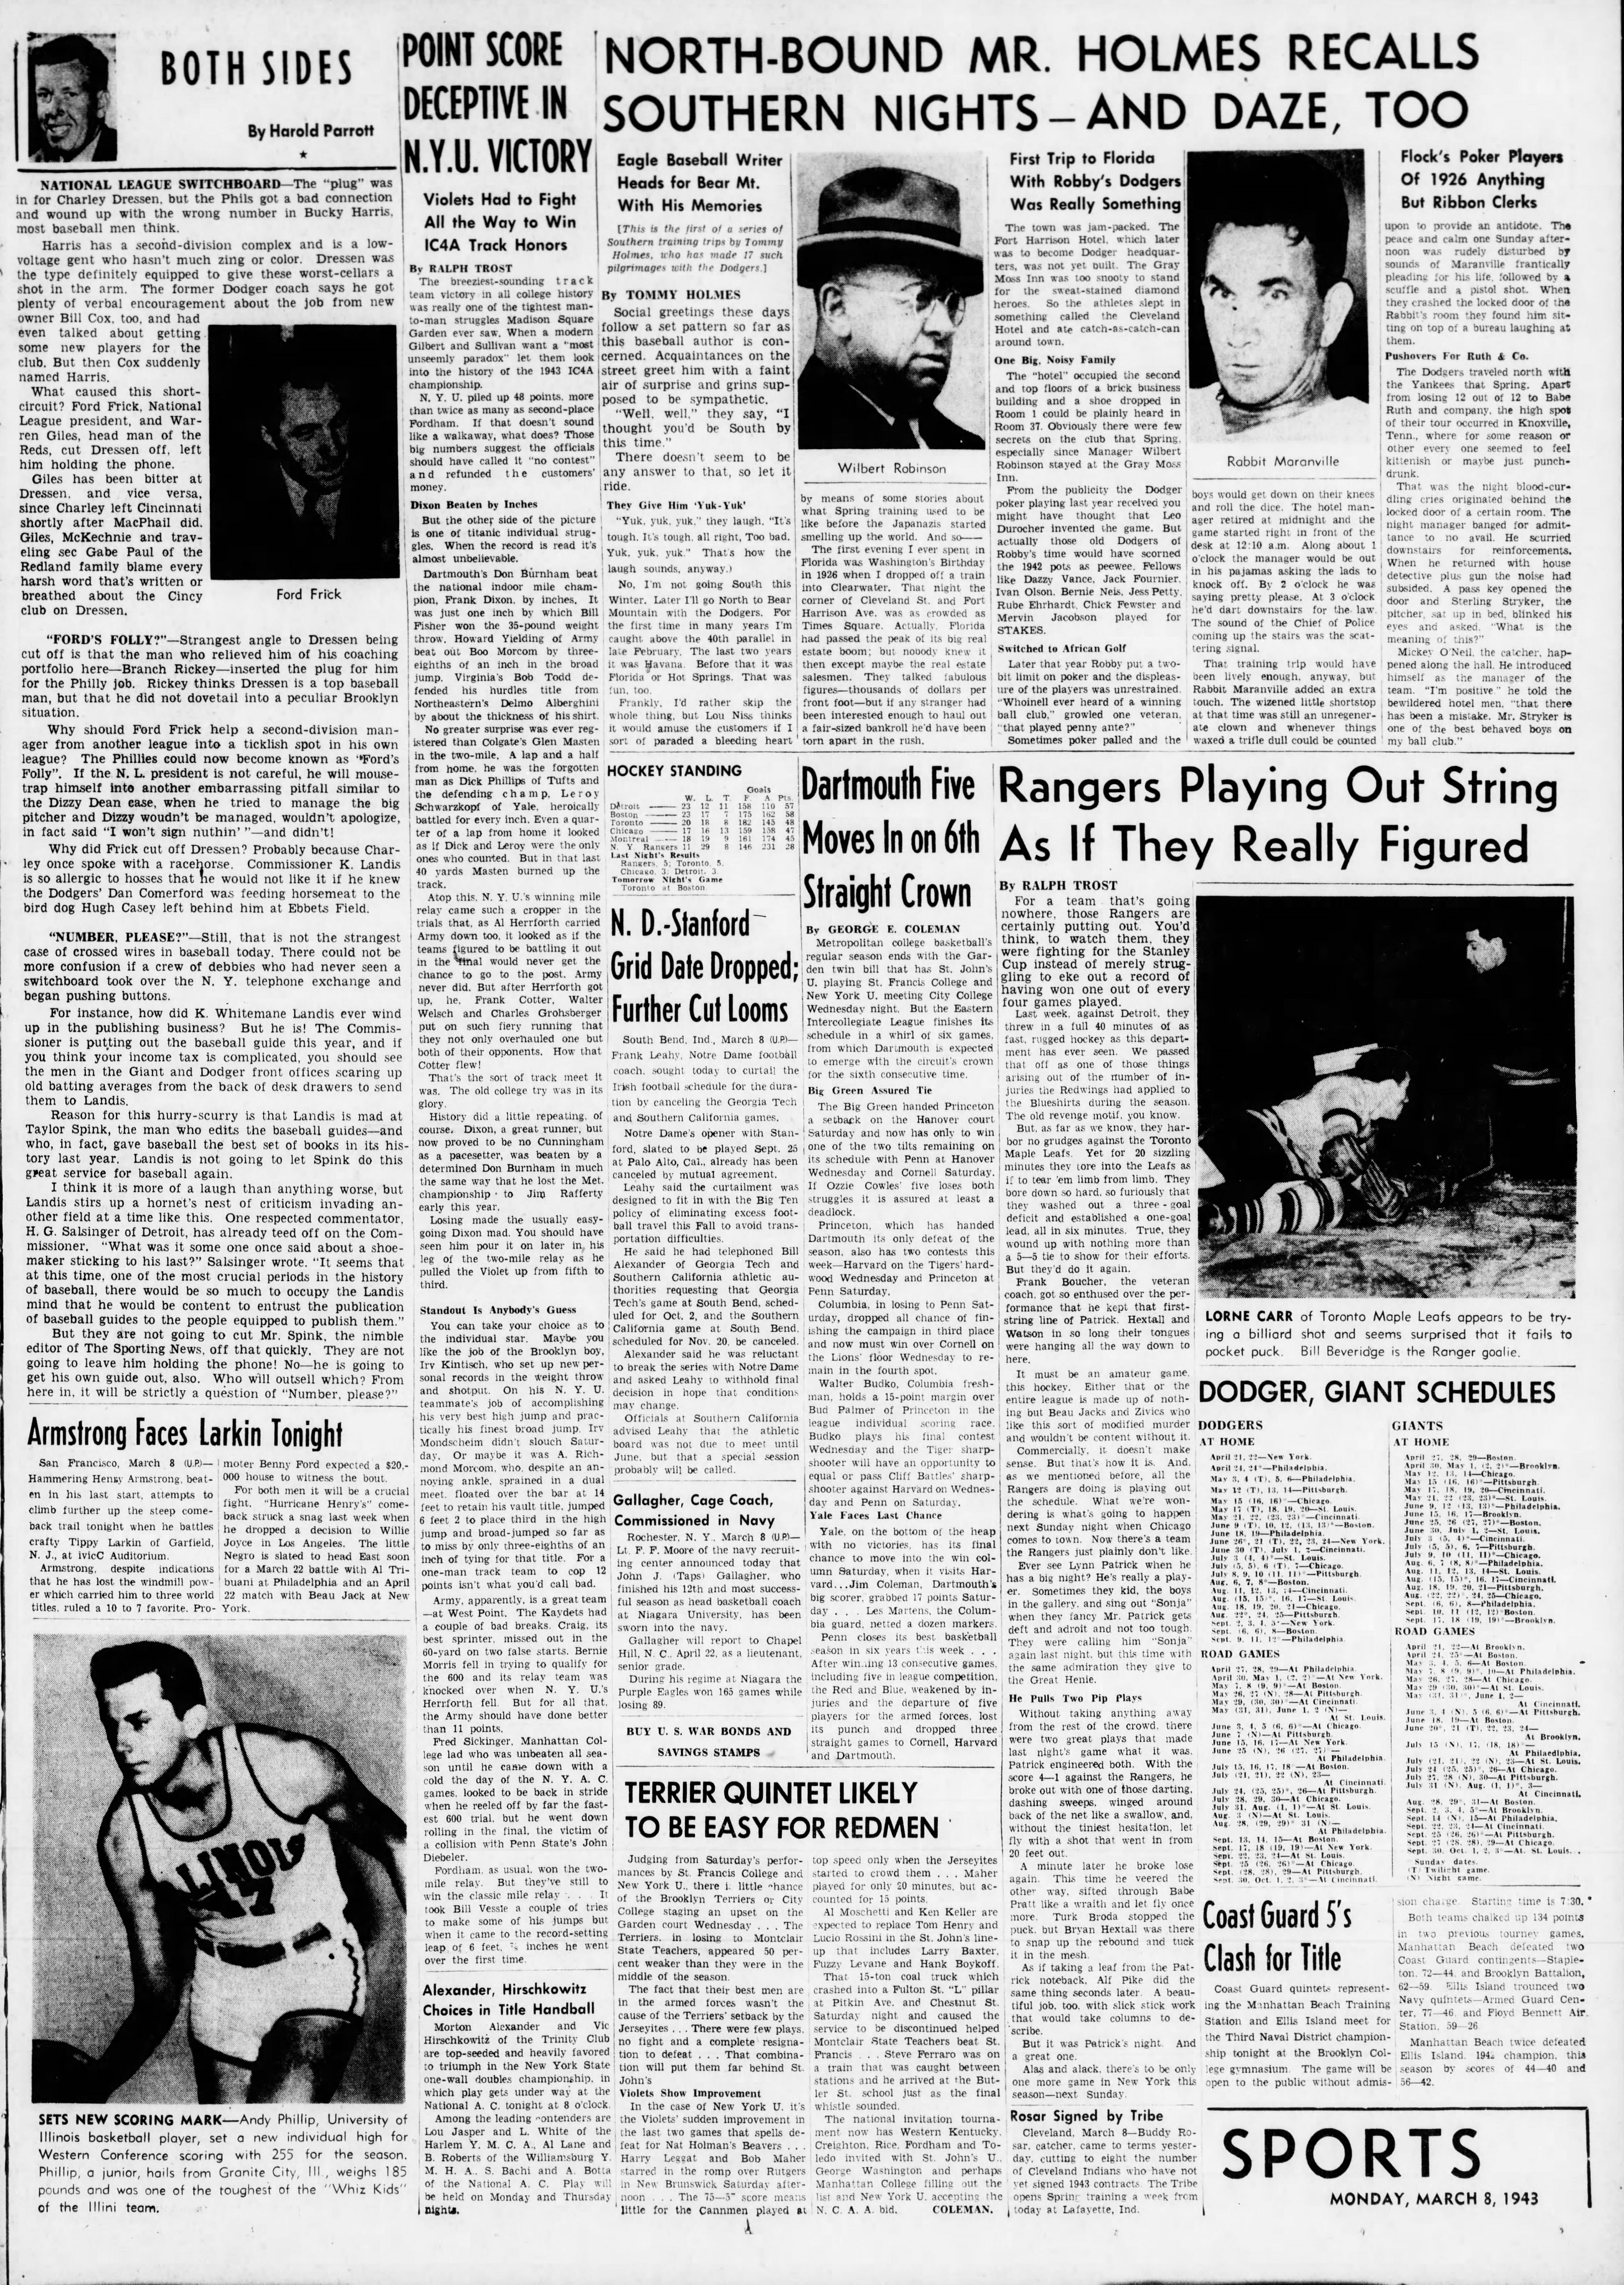 The_Brooklyn_Daily_Eagle_Mon__Mar_8__1943_(4).jpg